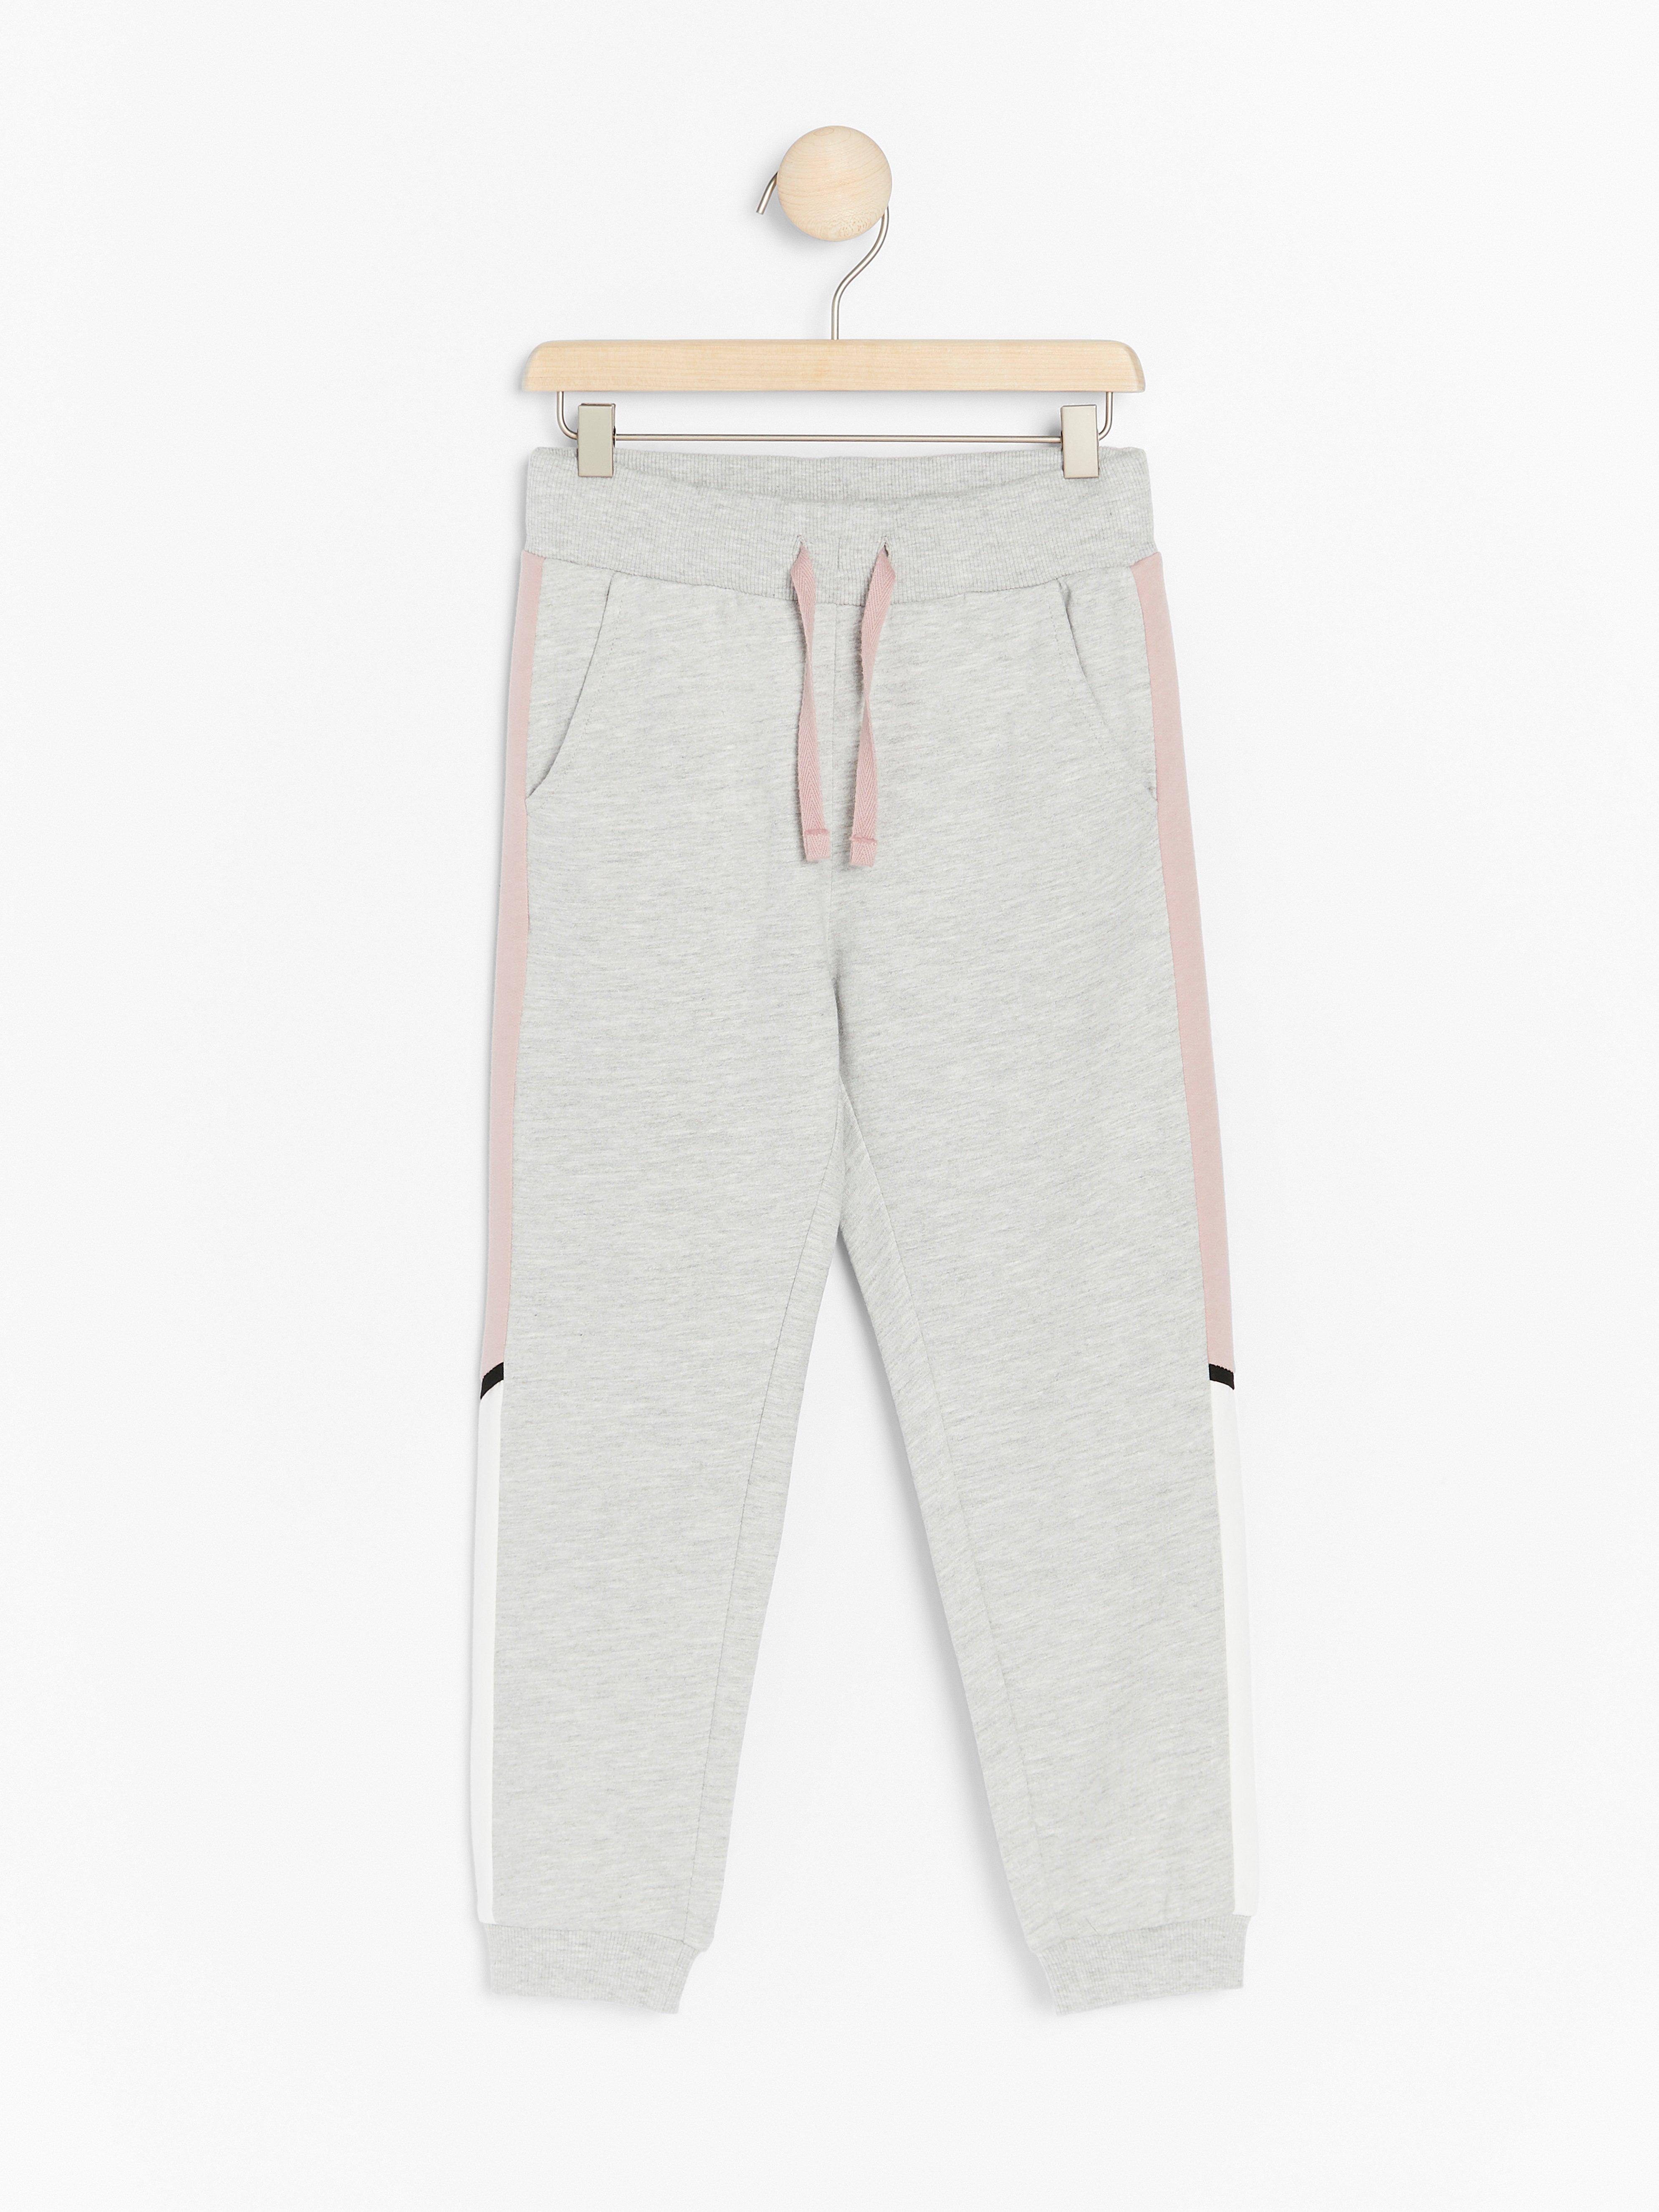 pink grey sweatpants